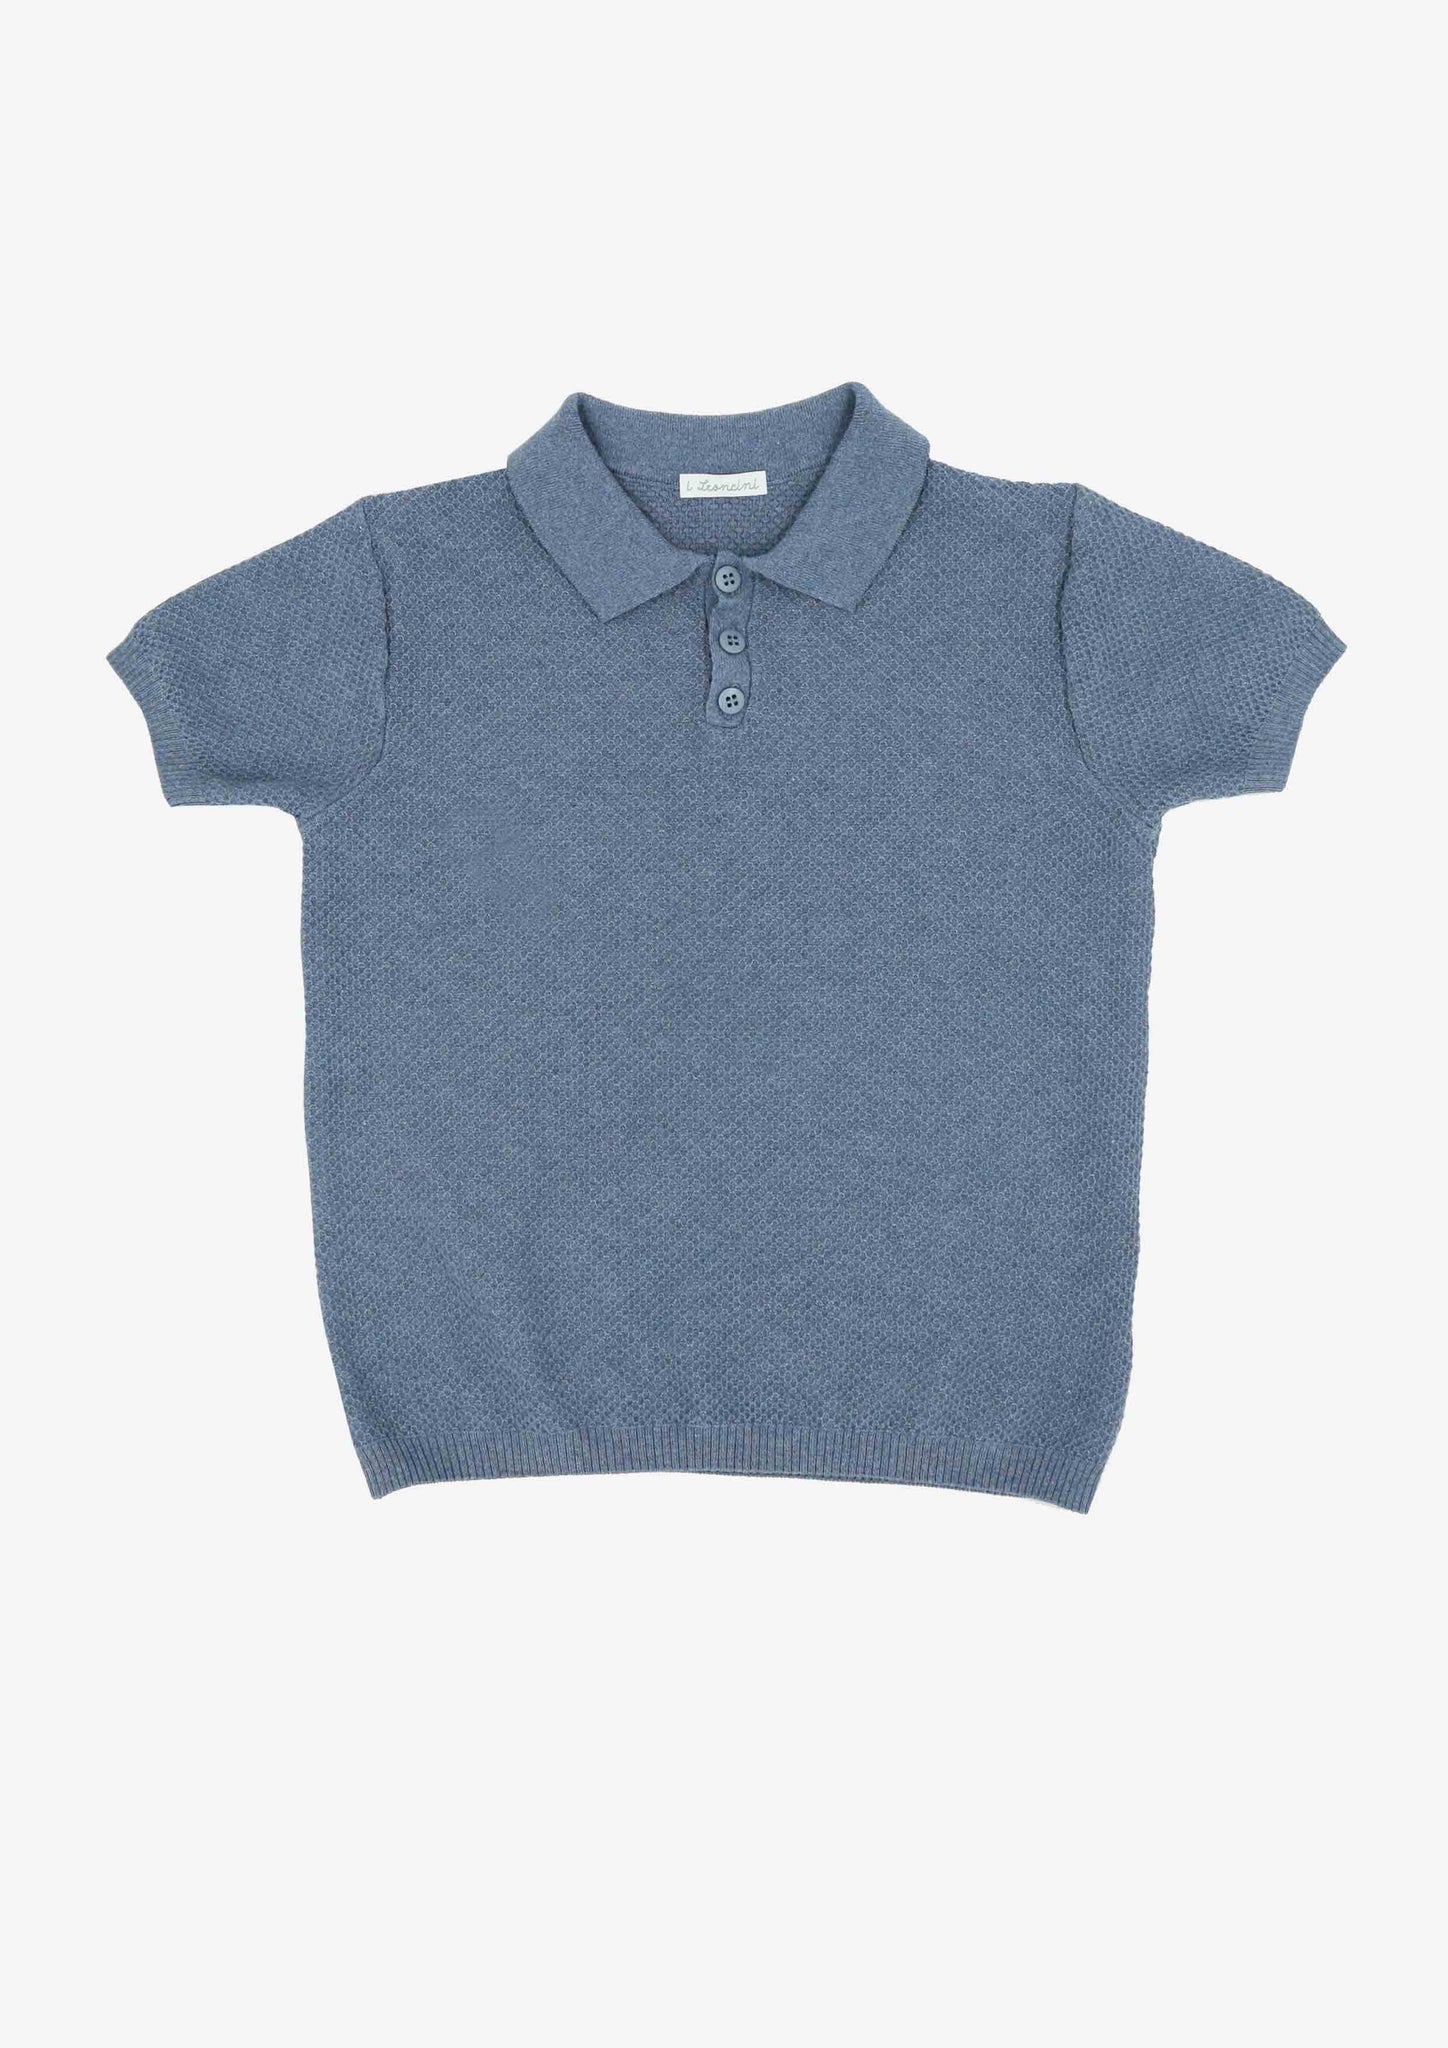 Polo BENNY Uomo-T-shirt, Camicie, Top e Canotte ADULTI-I Leoncini Shop